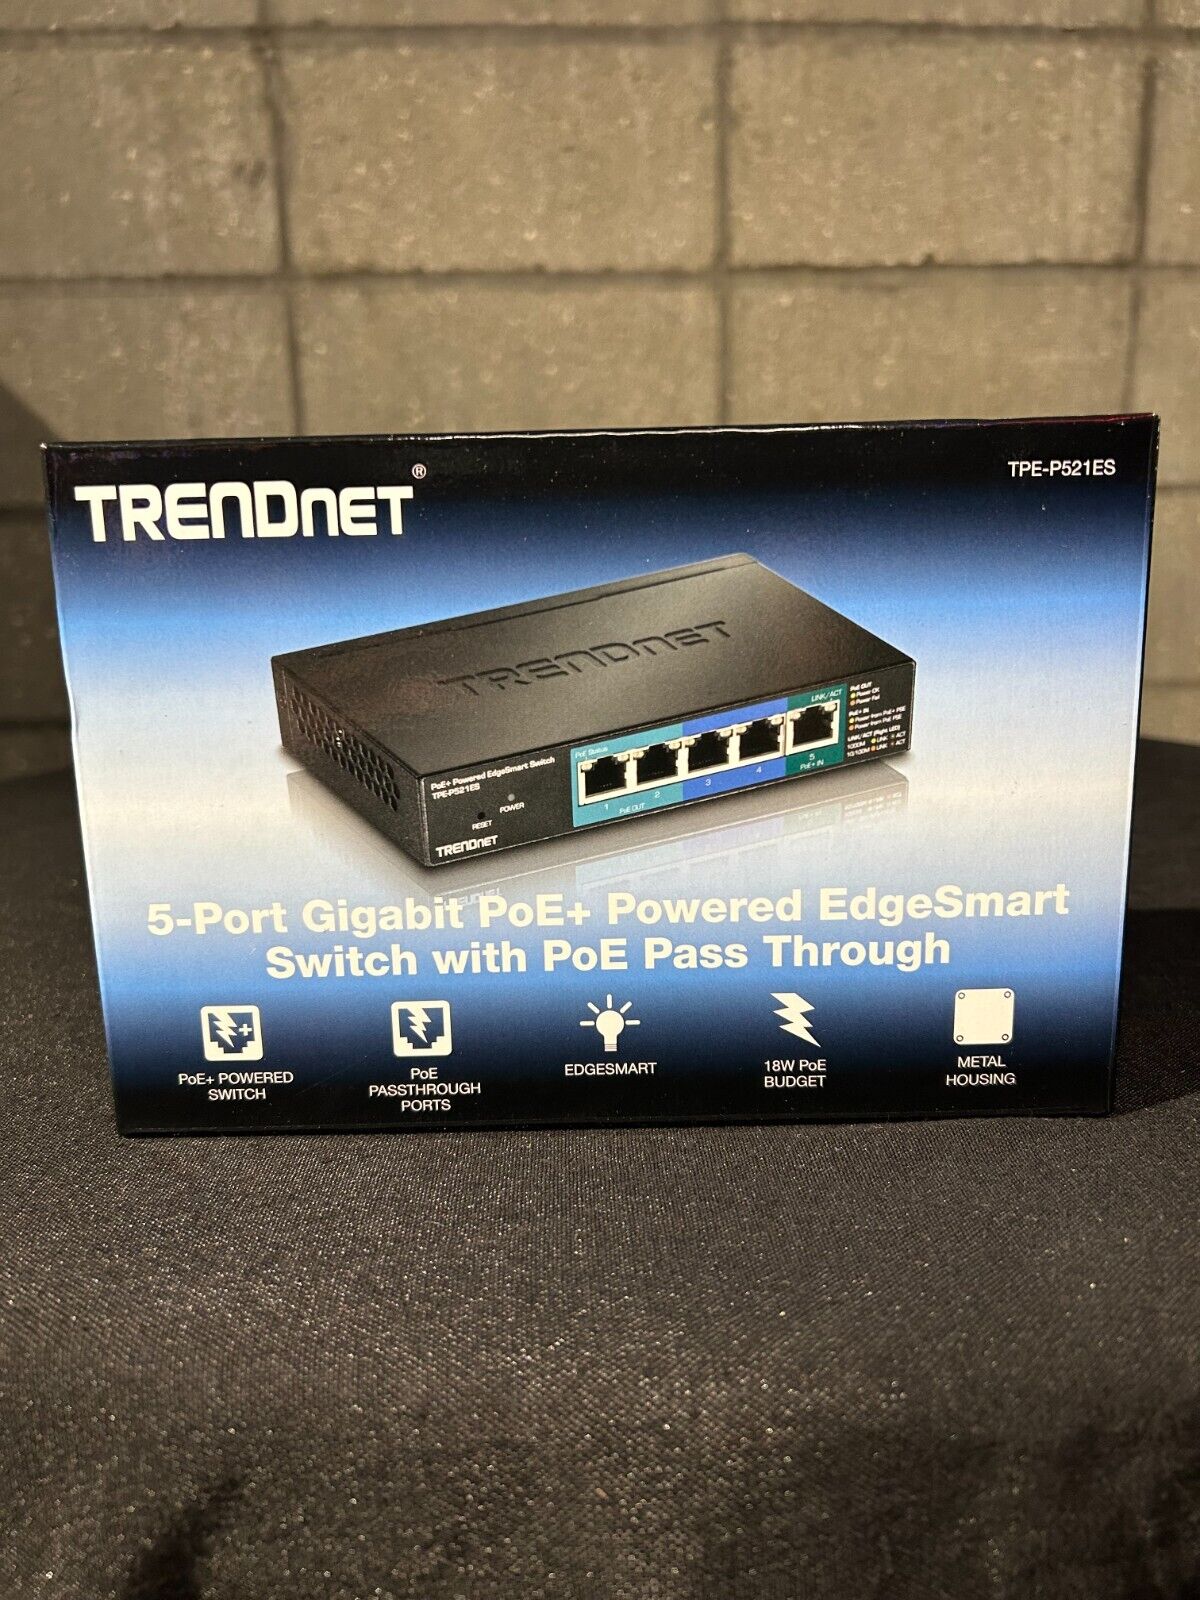 TRENDnet TPE-P521ES, 5-Port Gigabit PoE+ Powered EdgeSmart Switch with PoE Pass